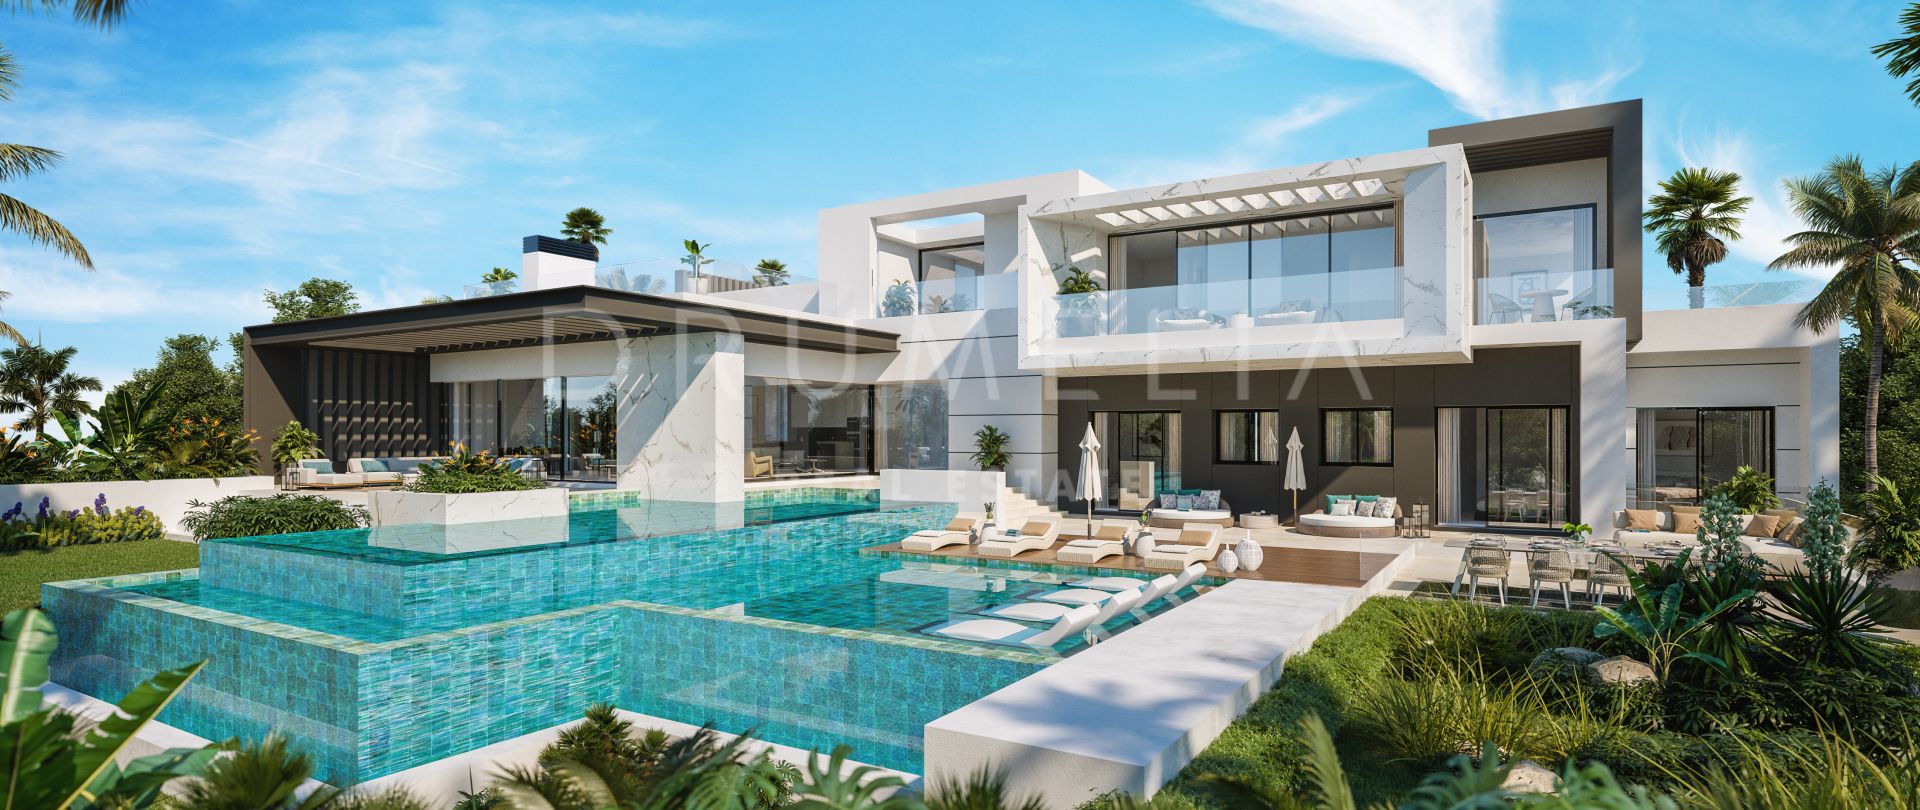 Fantastisk luksuriøs villa i moderne stil med havutsikt i vakre El Paraiso, Benahavis